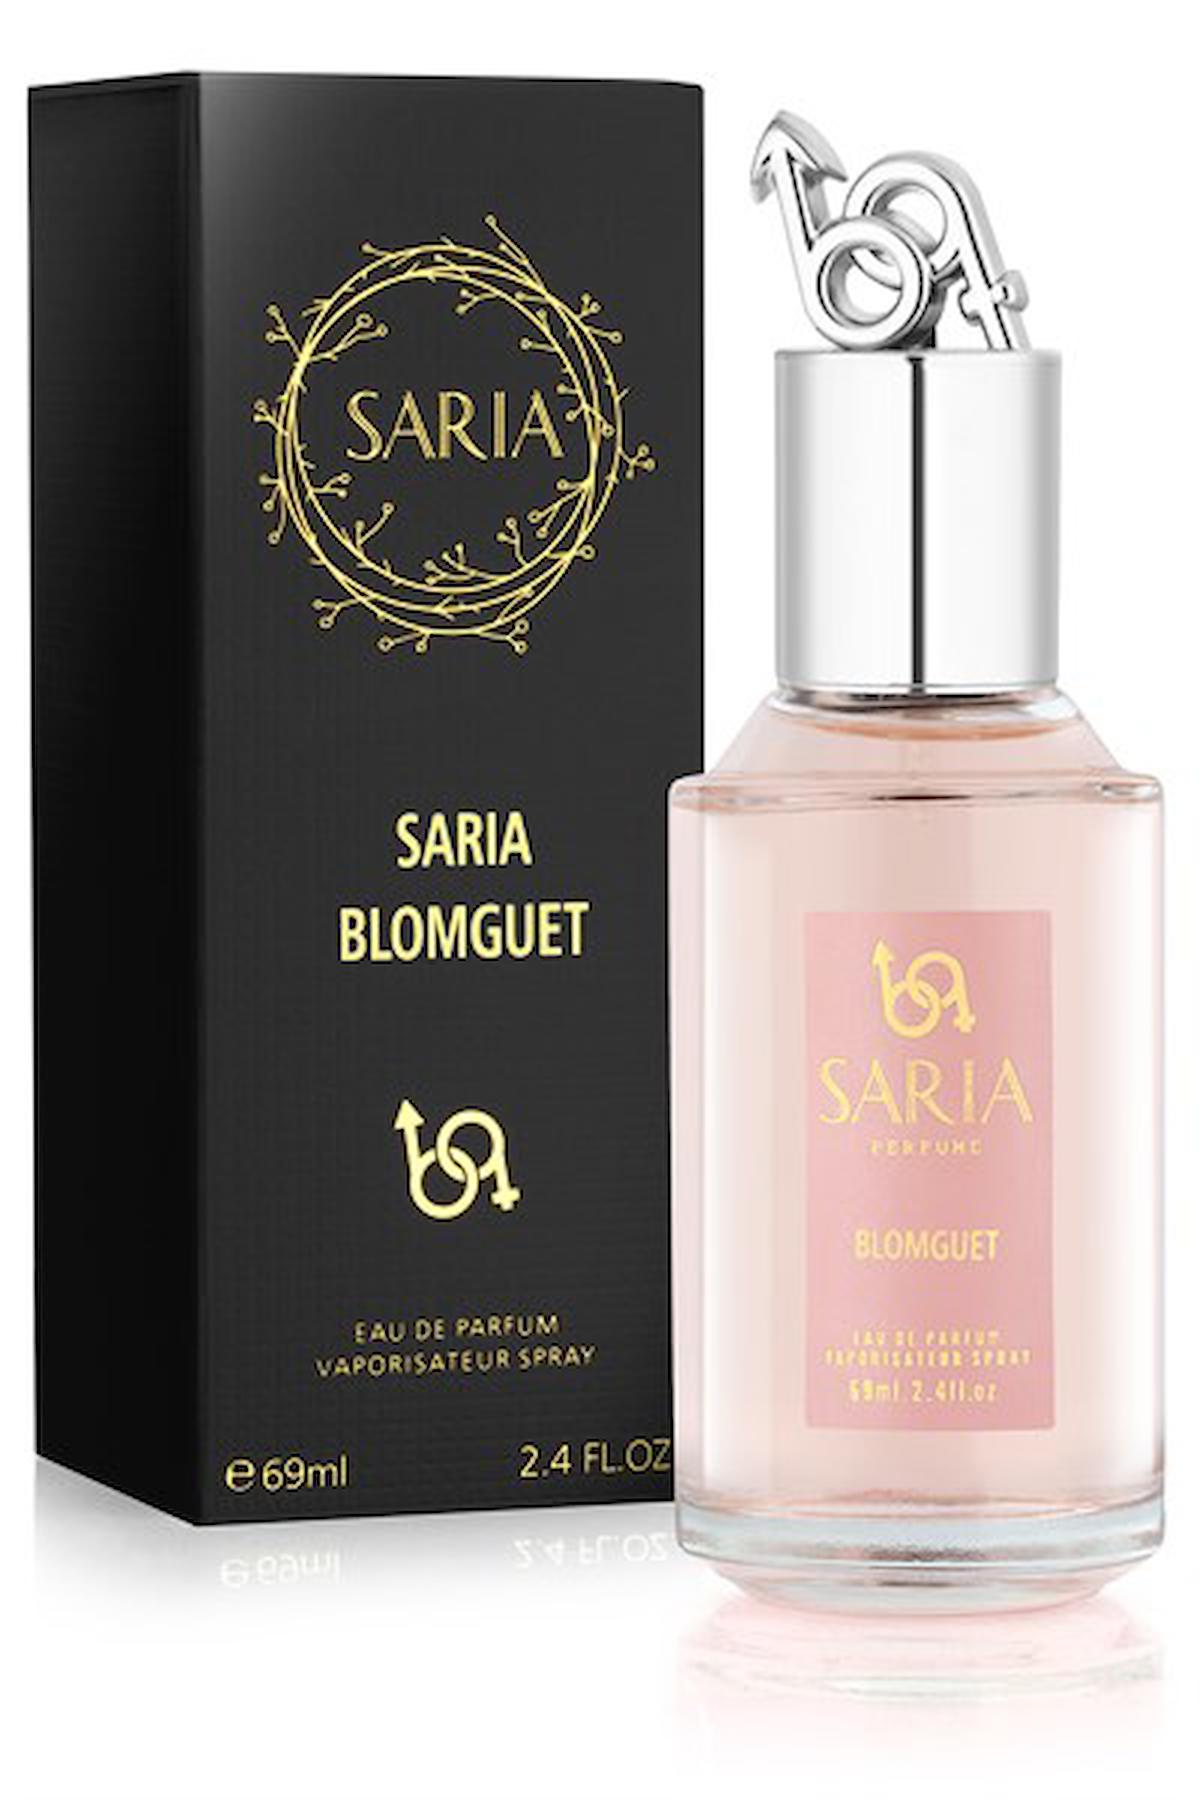 Saria Blomguet EDP Meyvemsi Kadın Parfüm 69 ml